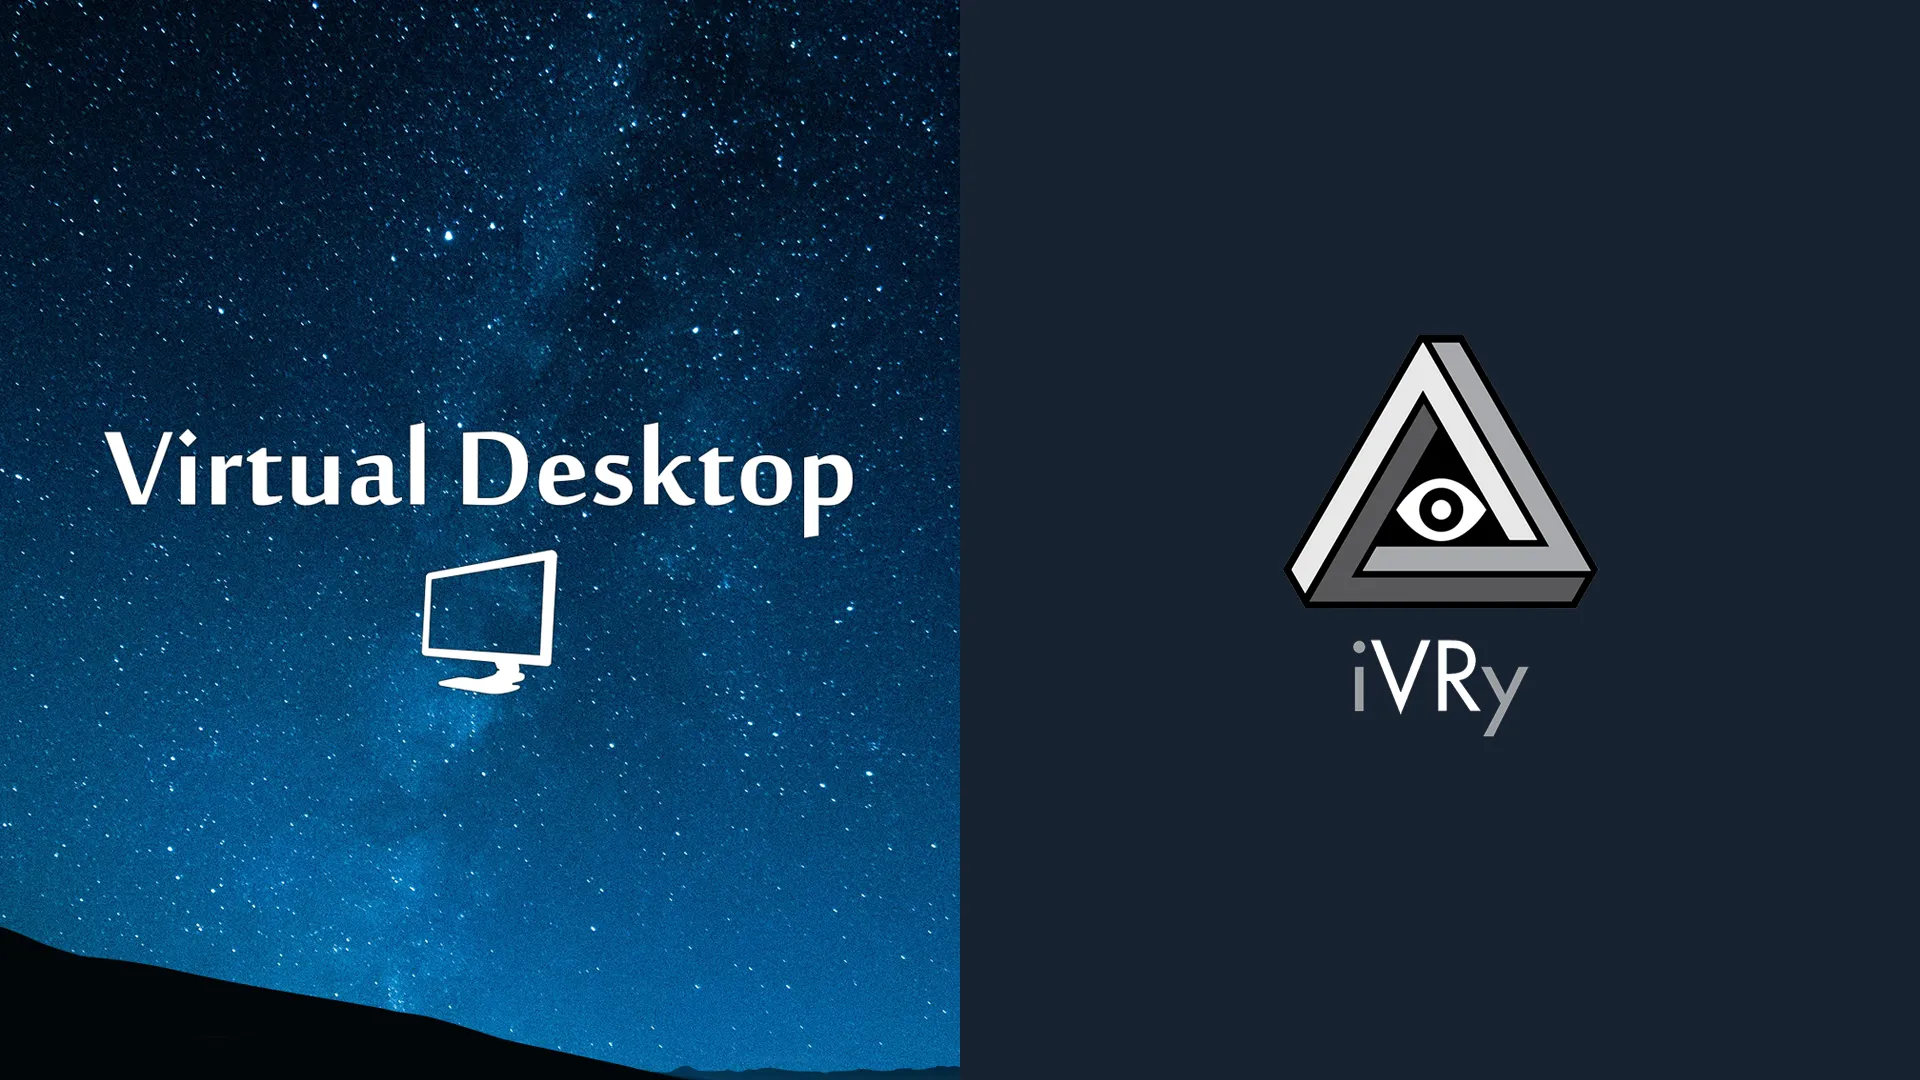 Virtual Desktop 和 iVRy 都在对 Apple Vision Pro 进行适配